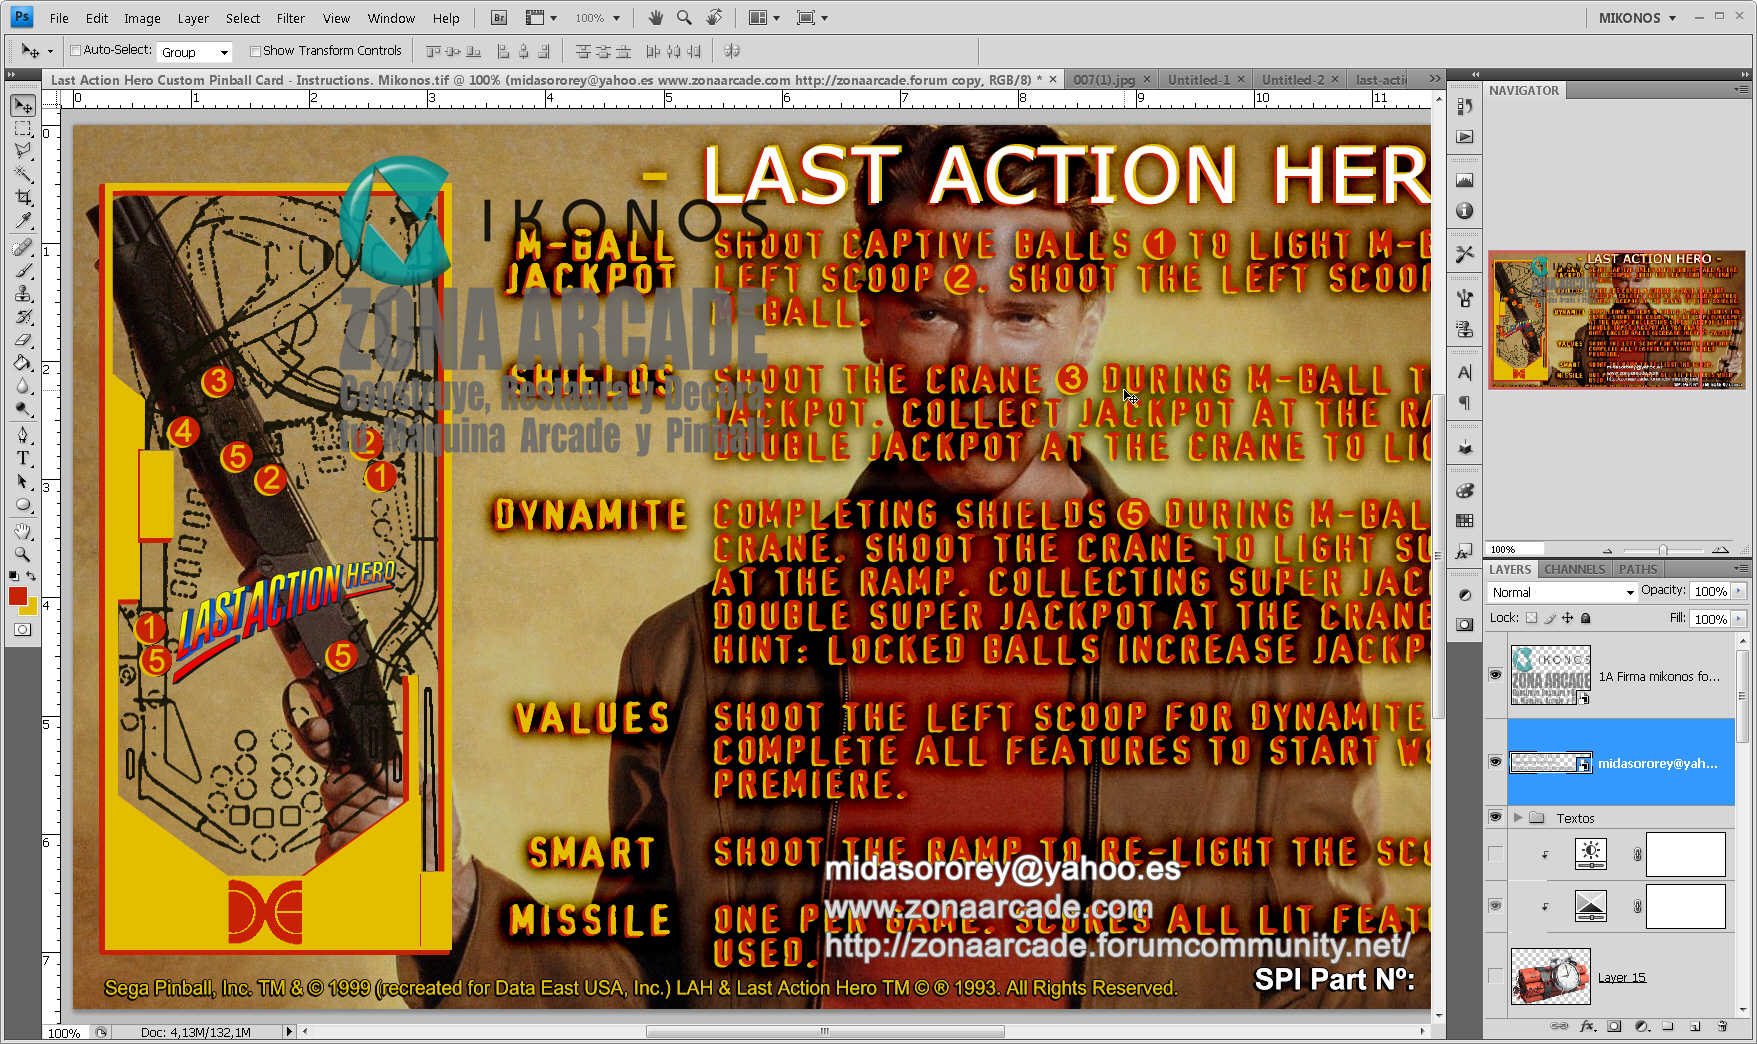 Last Action Hero%20Custom%20Pinball%20Cards%20-%20Instructions.%20Mikonos2